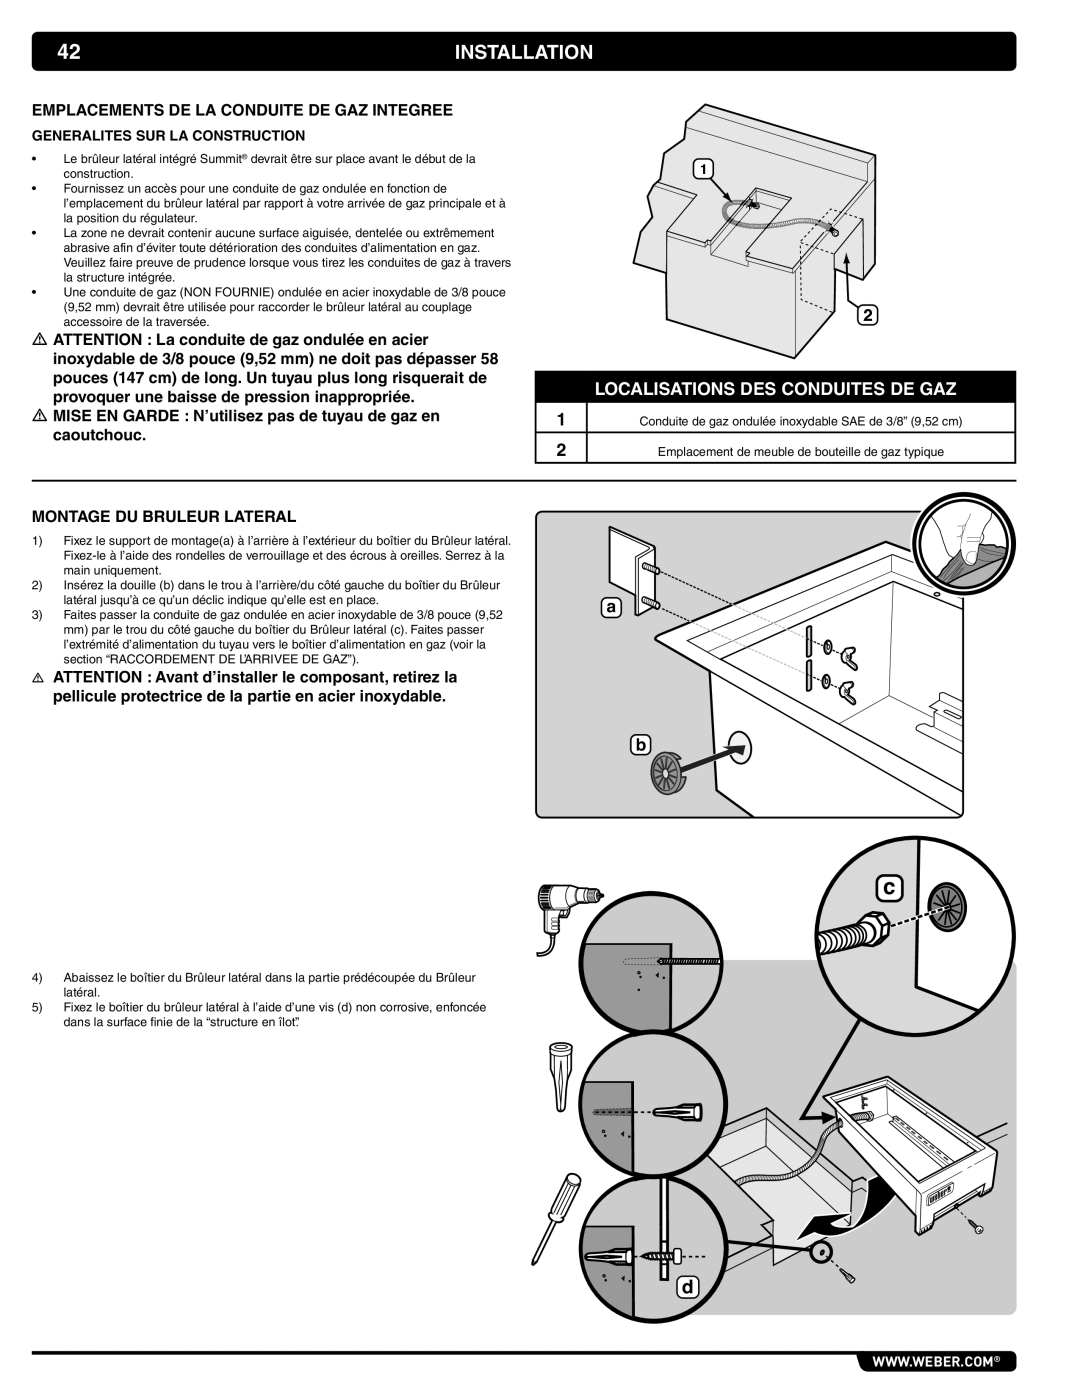 Weber 56069 manual Installation, Localisations Des Conduites De Gaz, Emplacements De La Conduite De Gaz Integree 